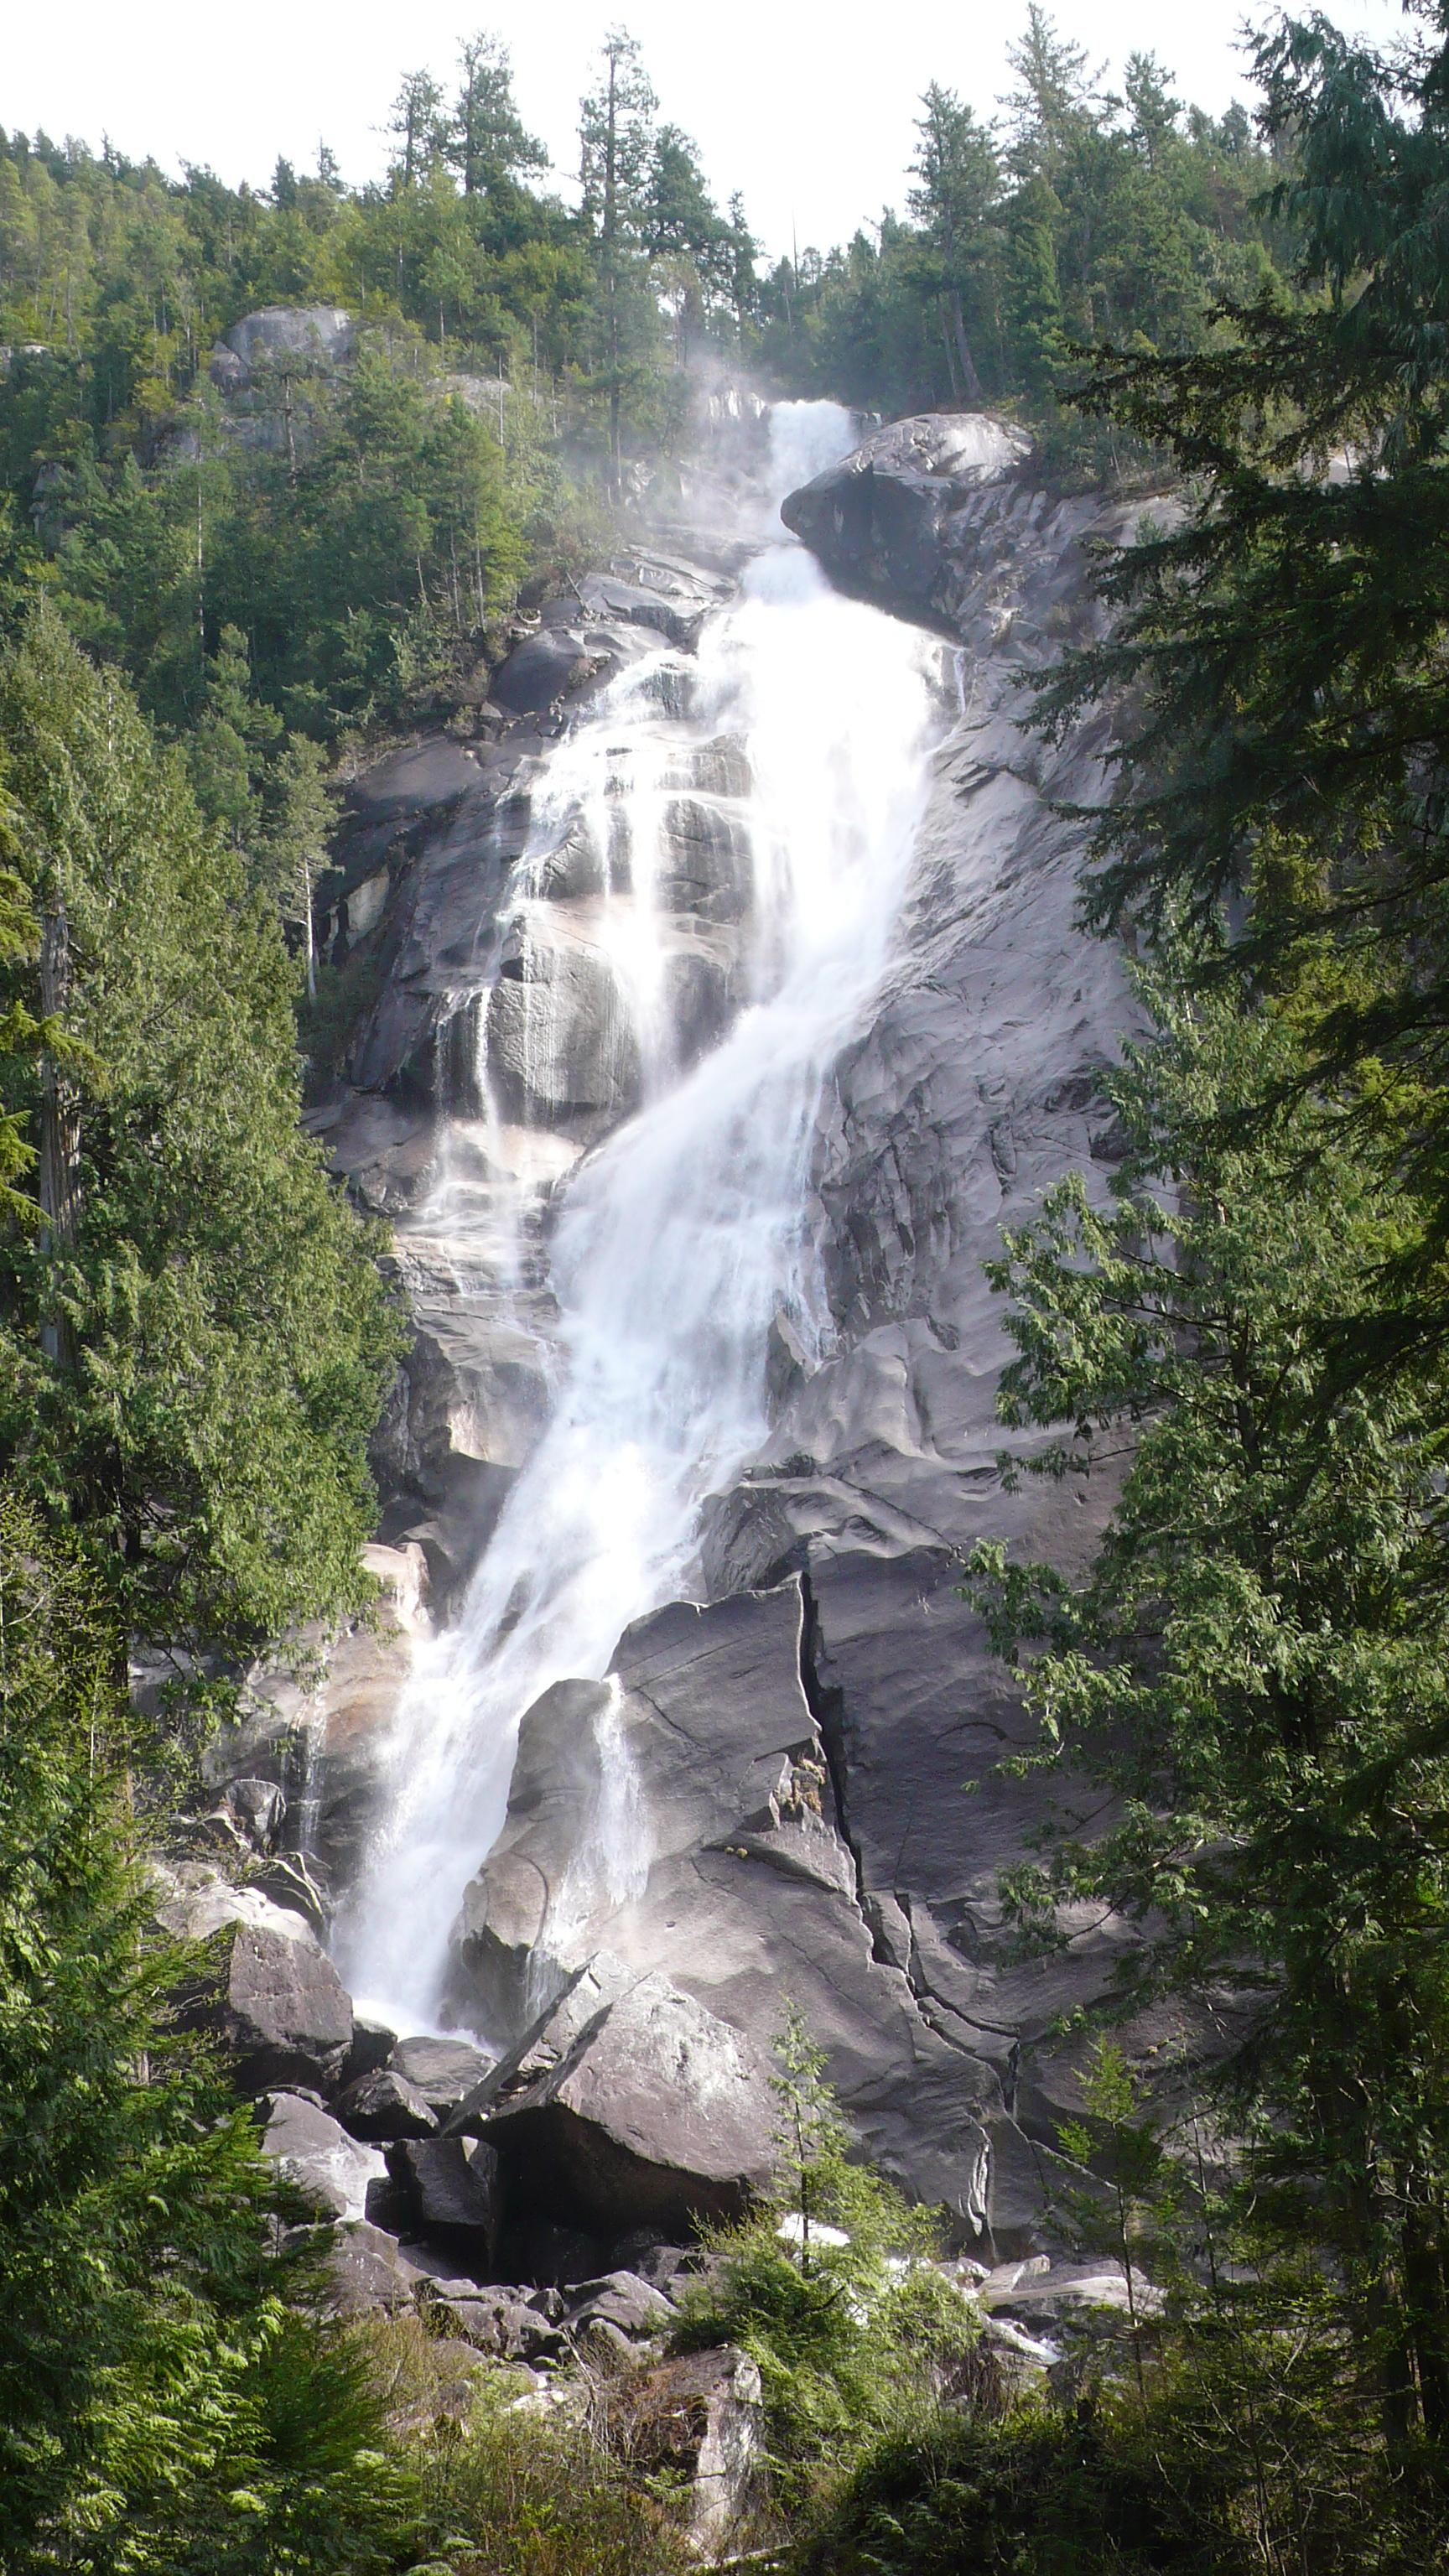 Shannon Falls waterfall in Squamish, British Columbia